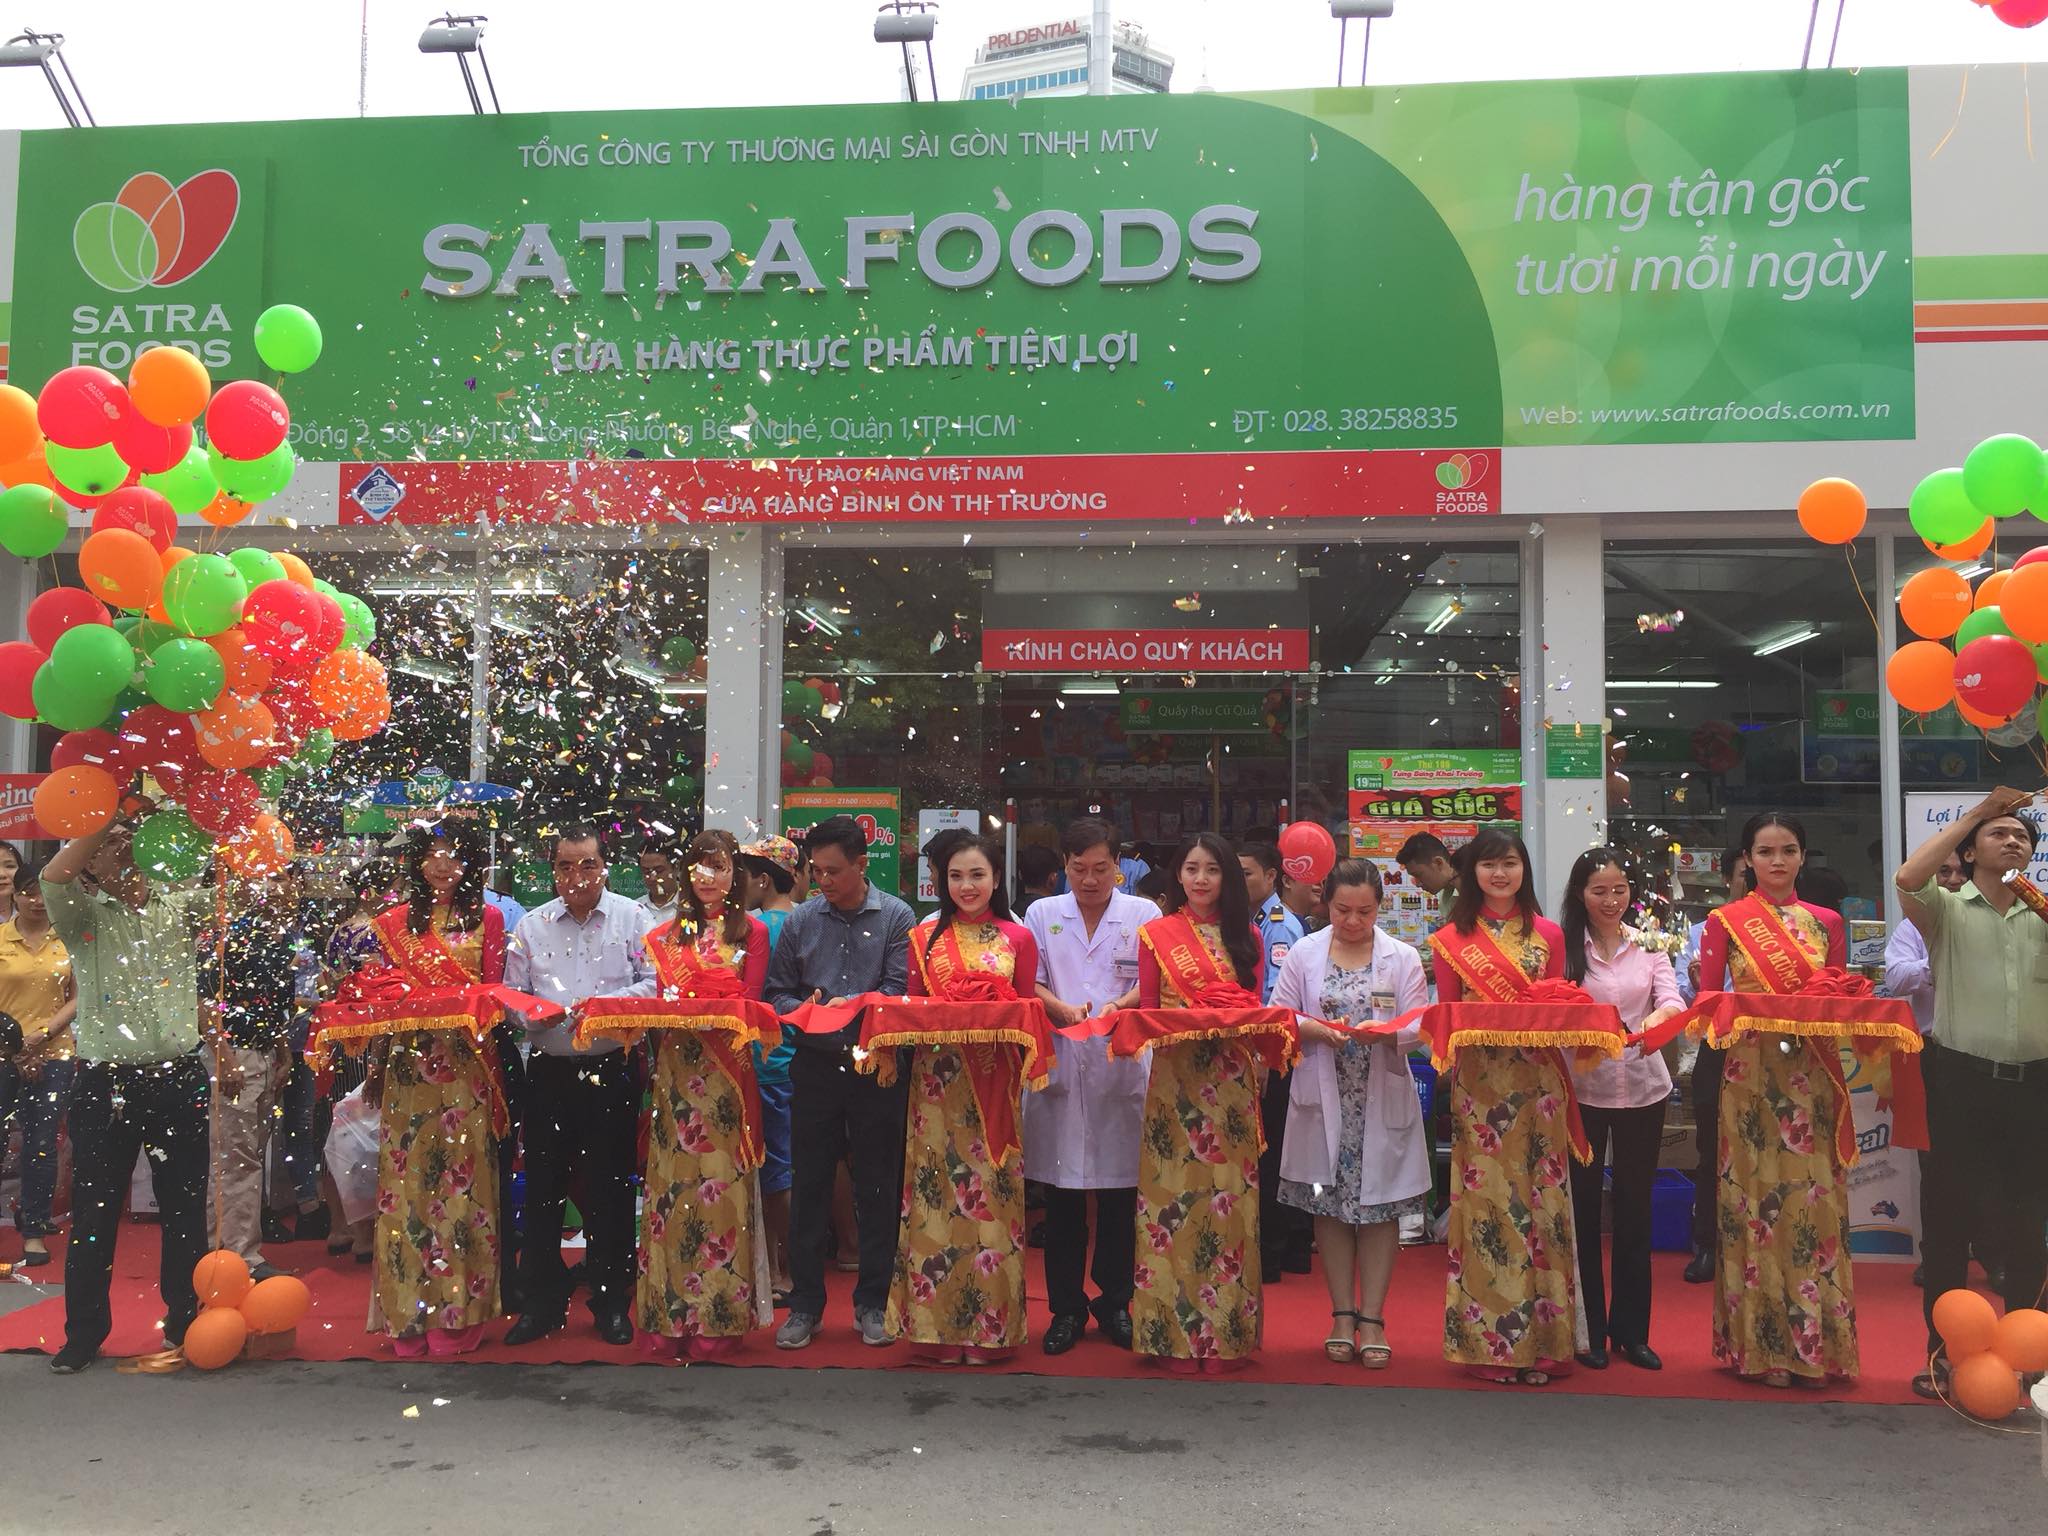 Satrafoods in Vietnam - Top 10 Convenience Store Chains in Vietnam